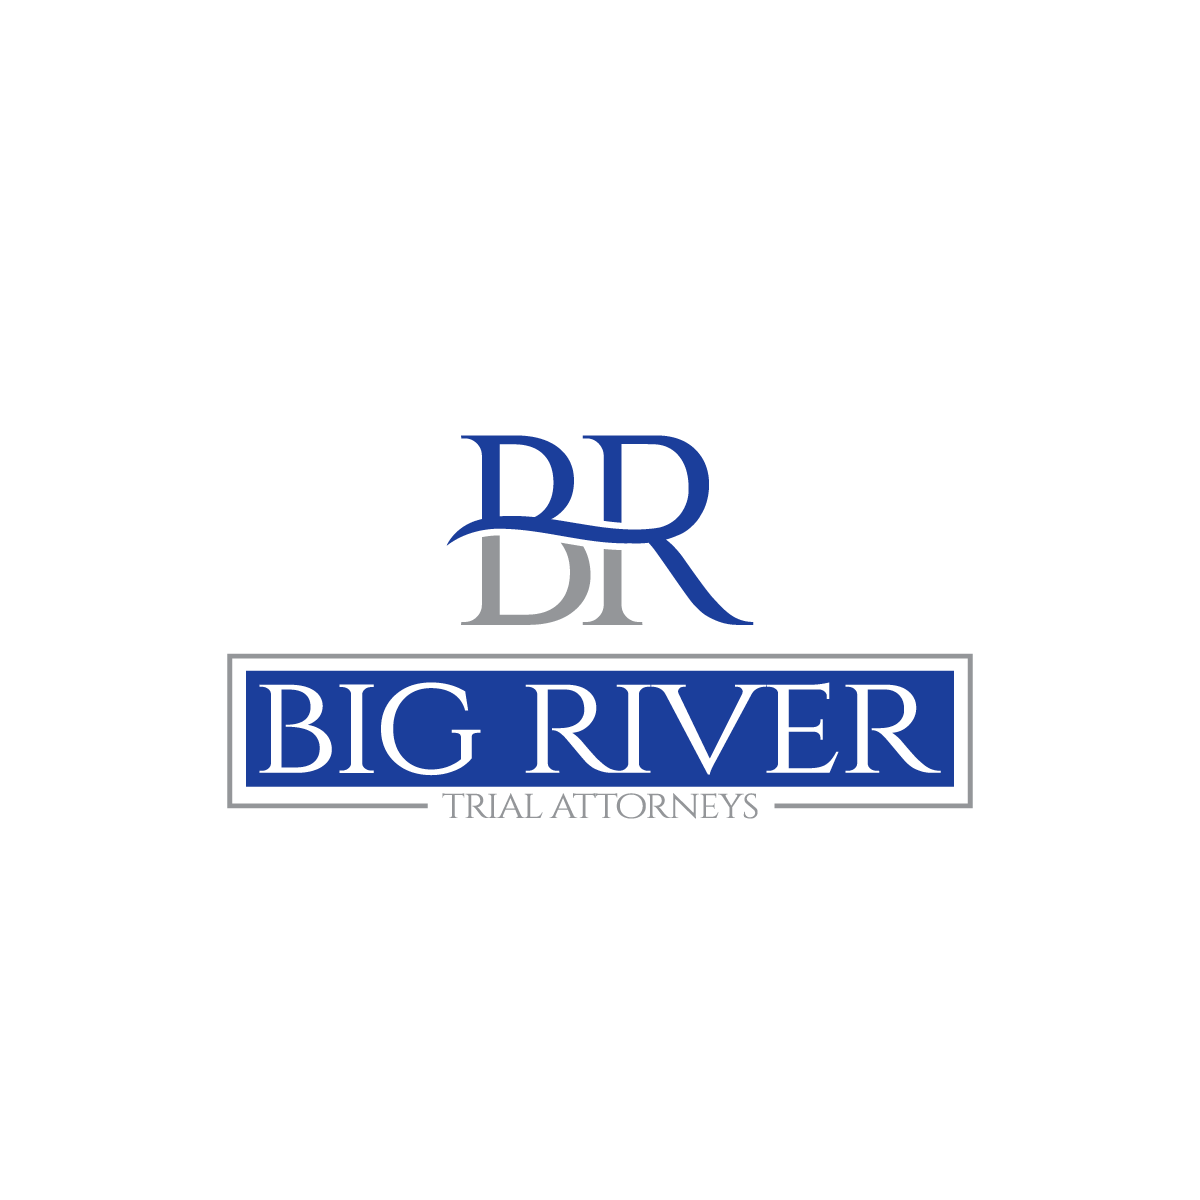 Big River Trial Attorneys - Baton Rouge, LA 70816 - (225)963-9638 | ShowMeLocal.com